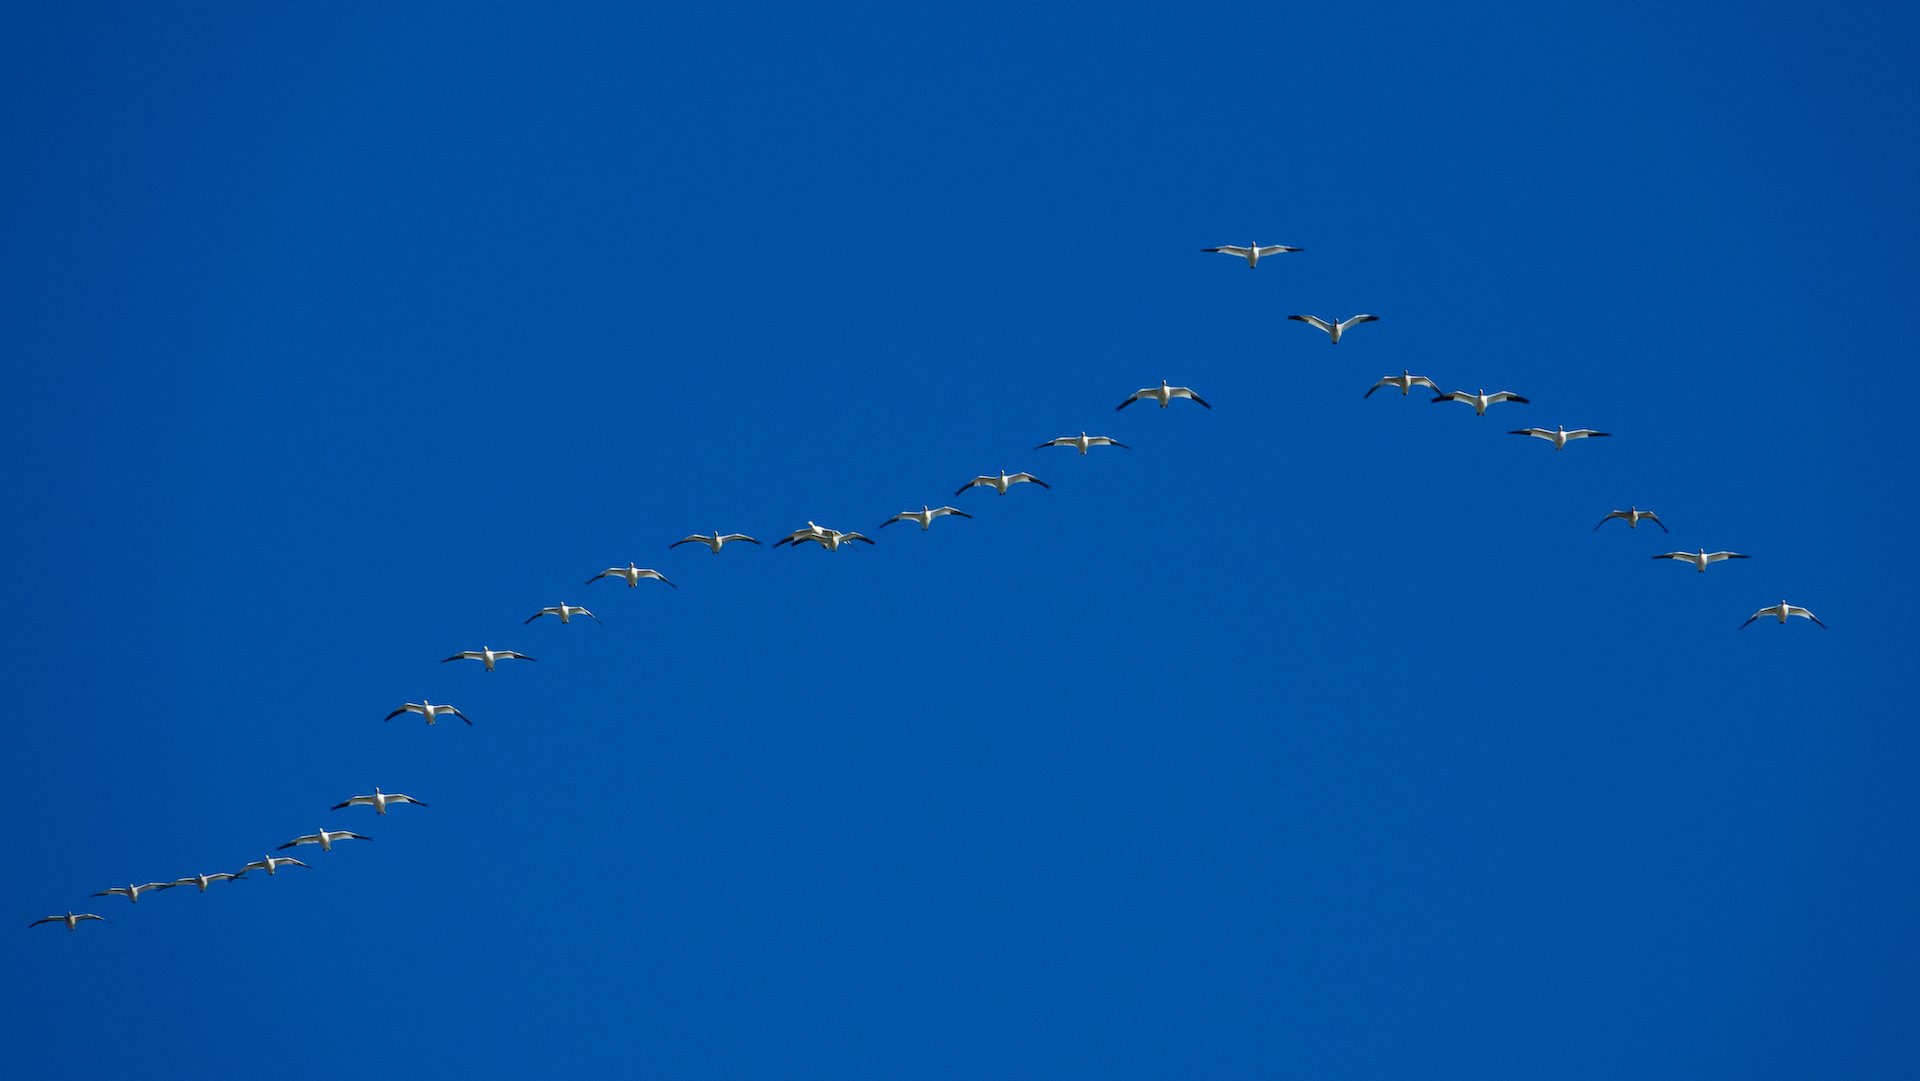  The flocks of snow geese kept flying overhead. 